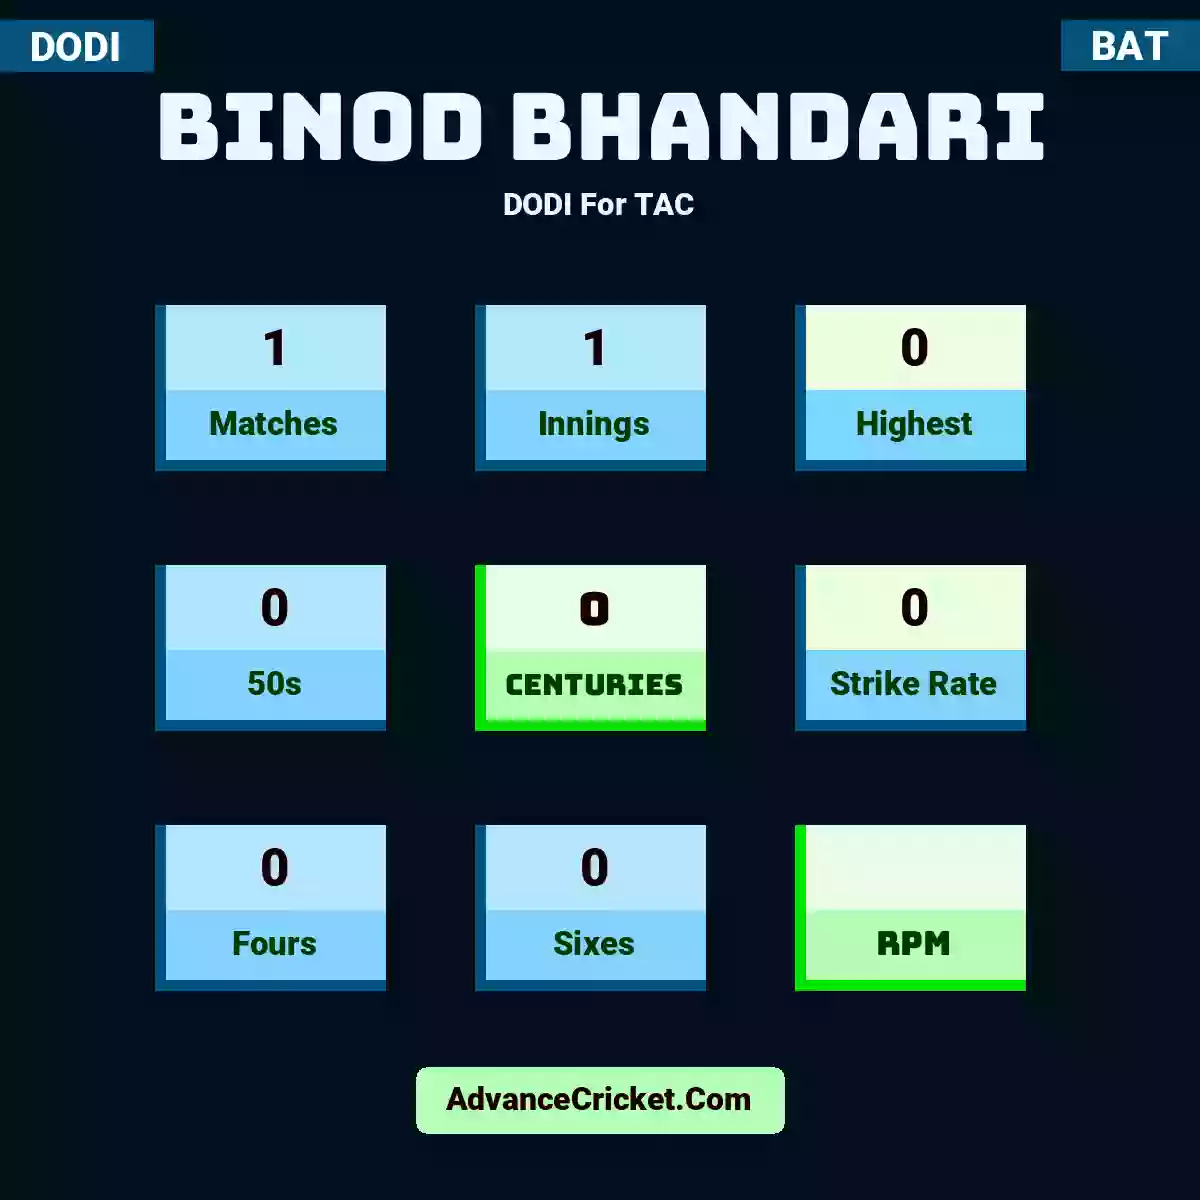 Binod Bhandari DODI  For TAC, Binod Bhandari played 1 matches, scored 0 runs as highest, 0 half-centuries, and 0 centuries, with a strike rate of 0. B.Bhandari hit 0 fours and 0 sixes.